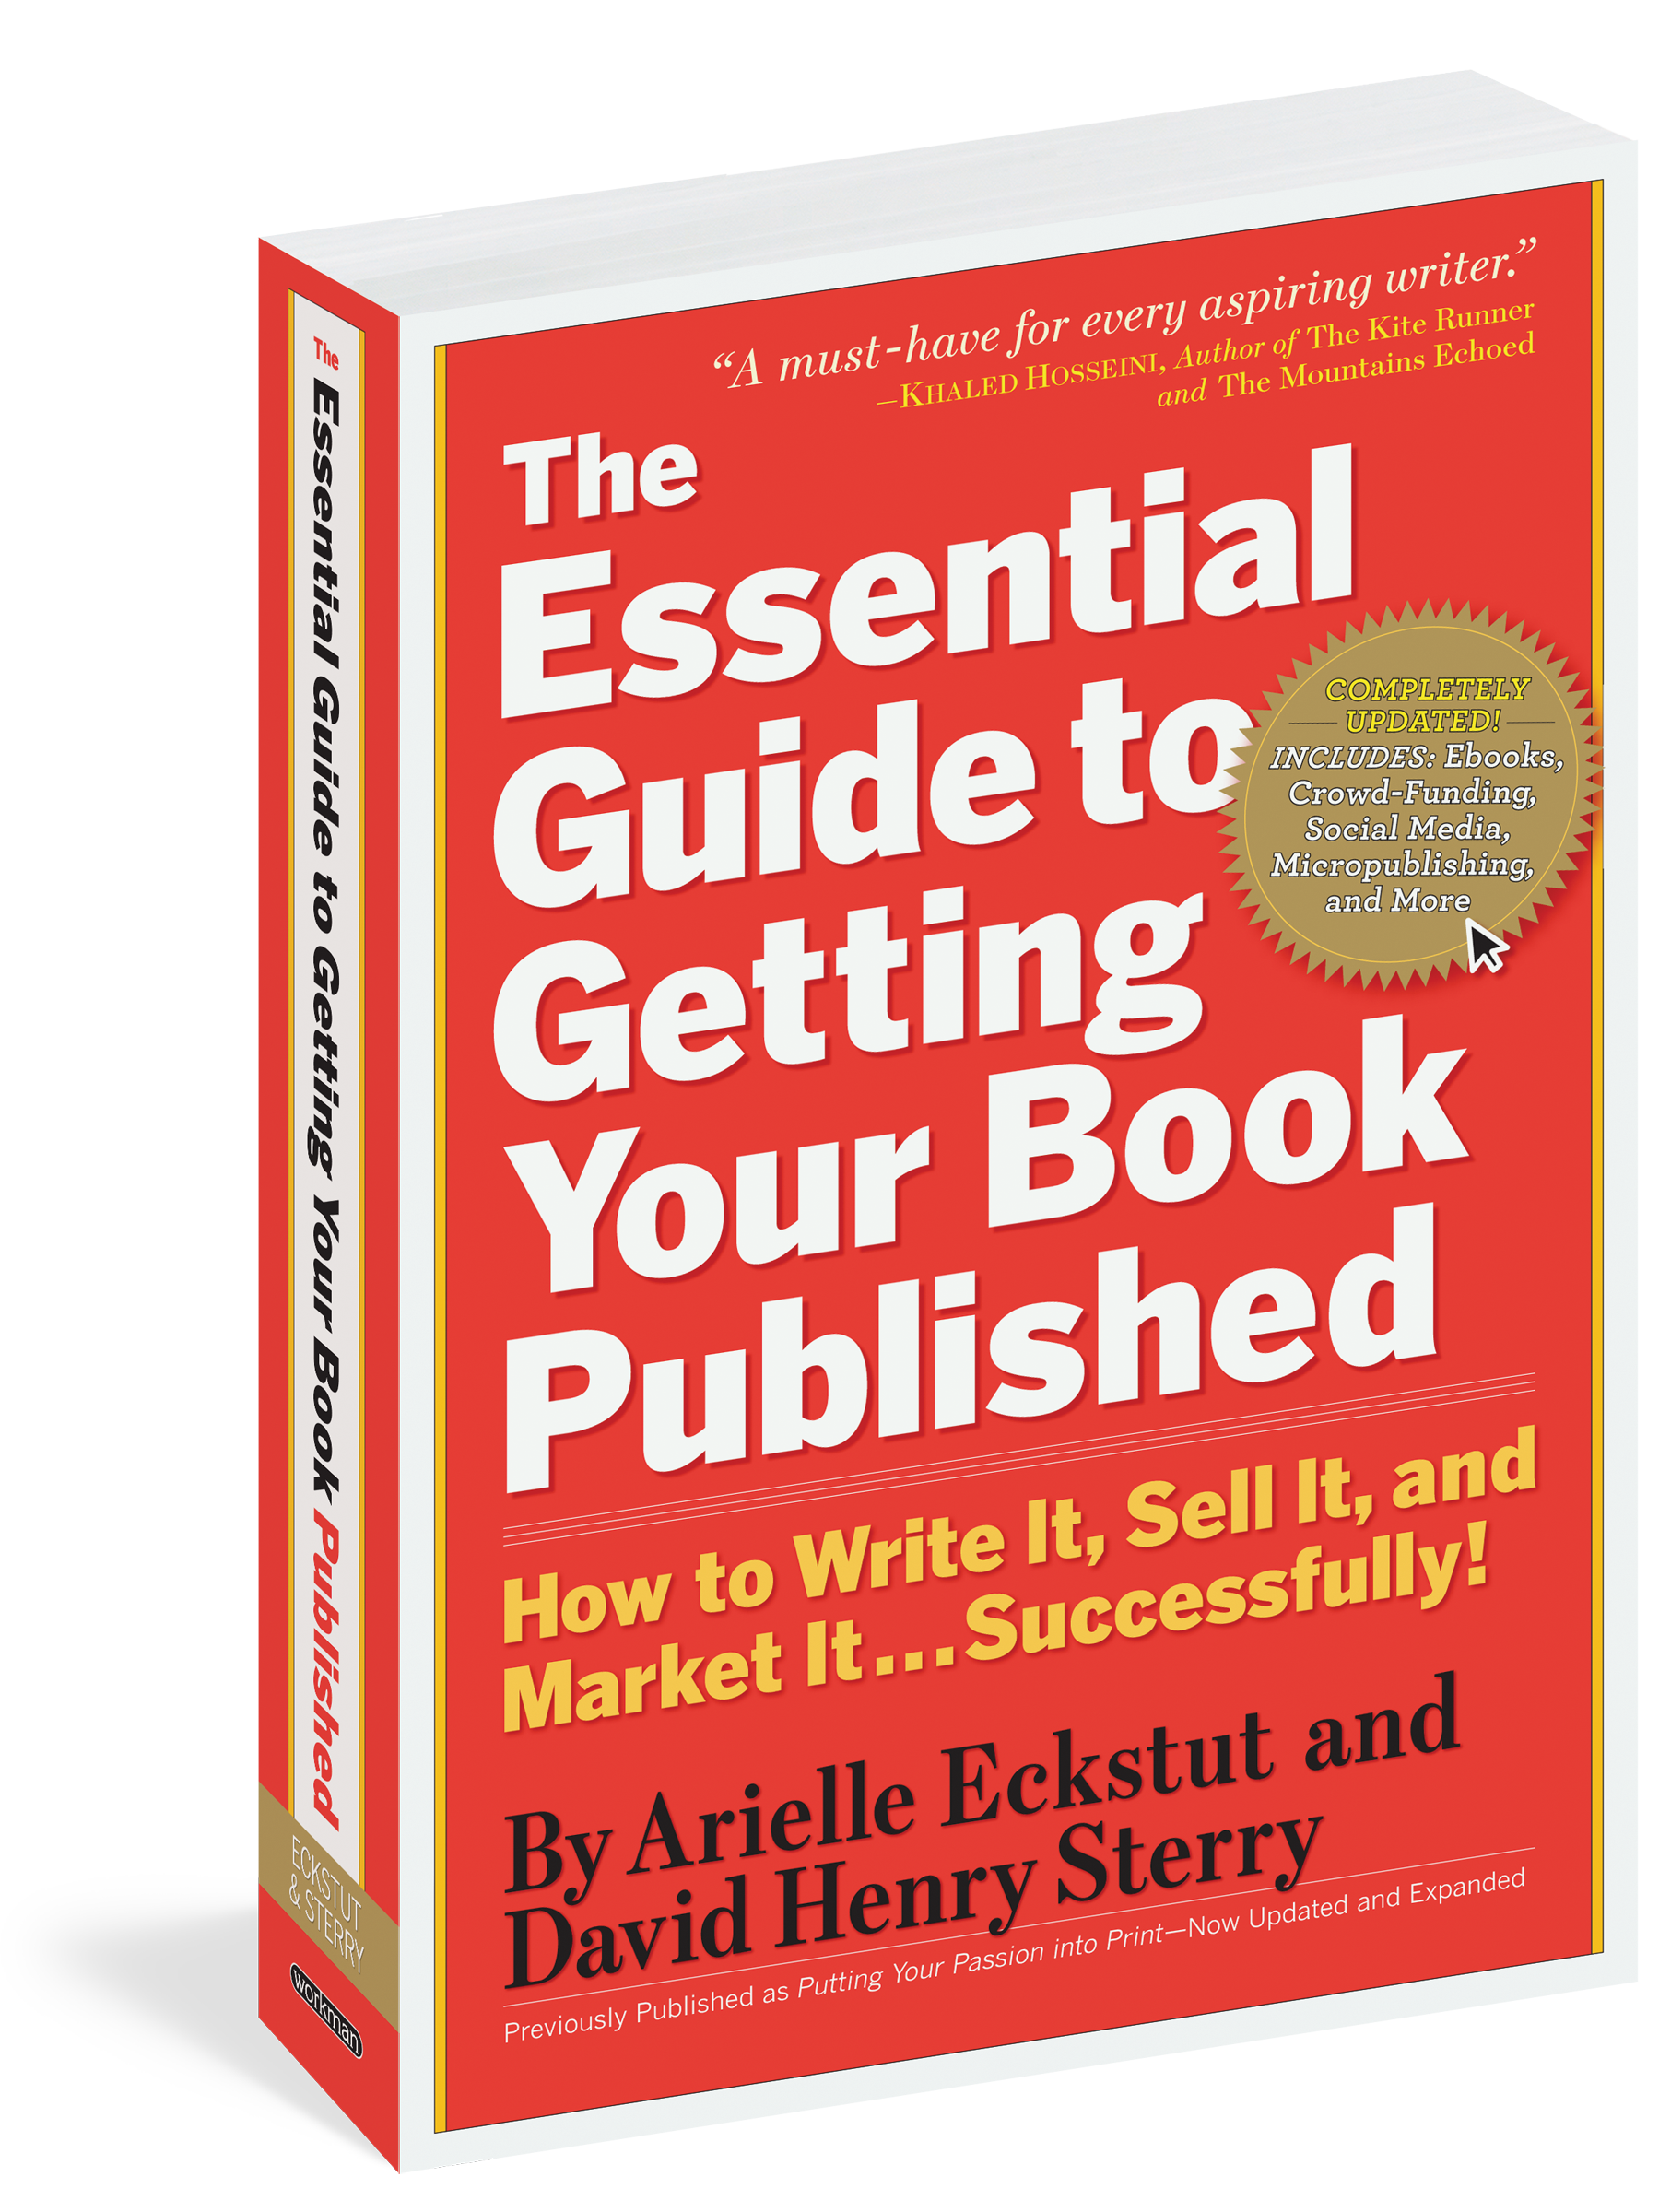 how to write a kindle ebook fast